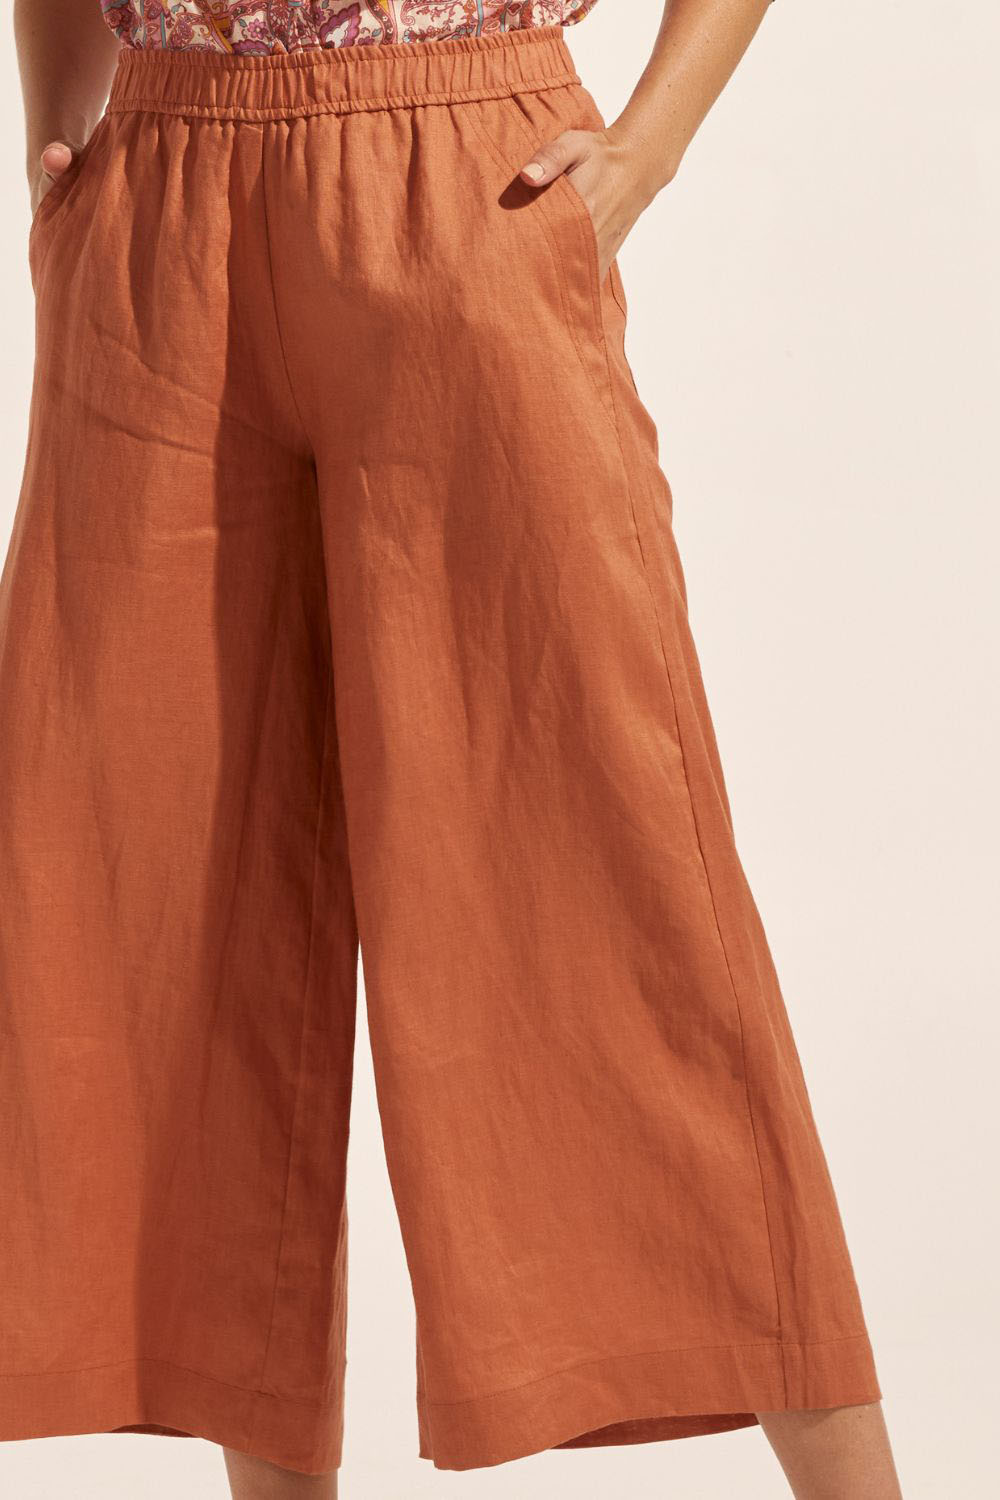 ginger, pants, elasticated waist, side pockets, wide leg, close up image